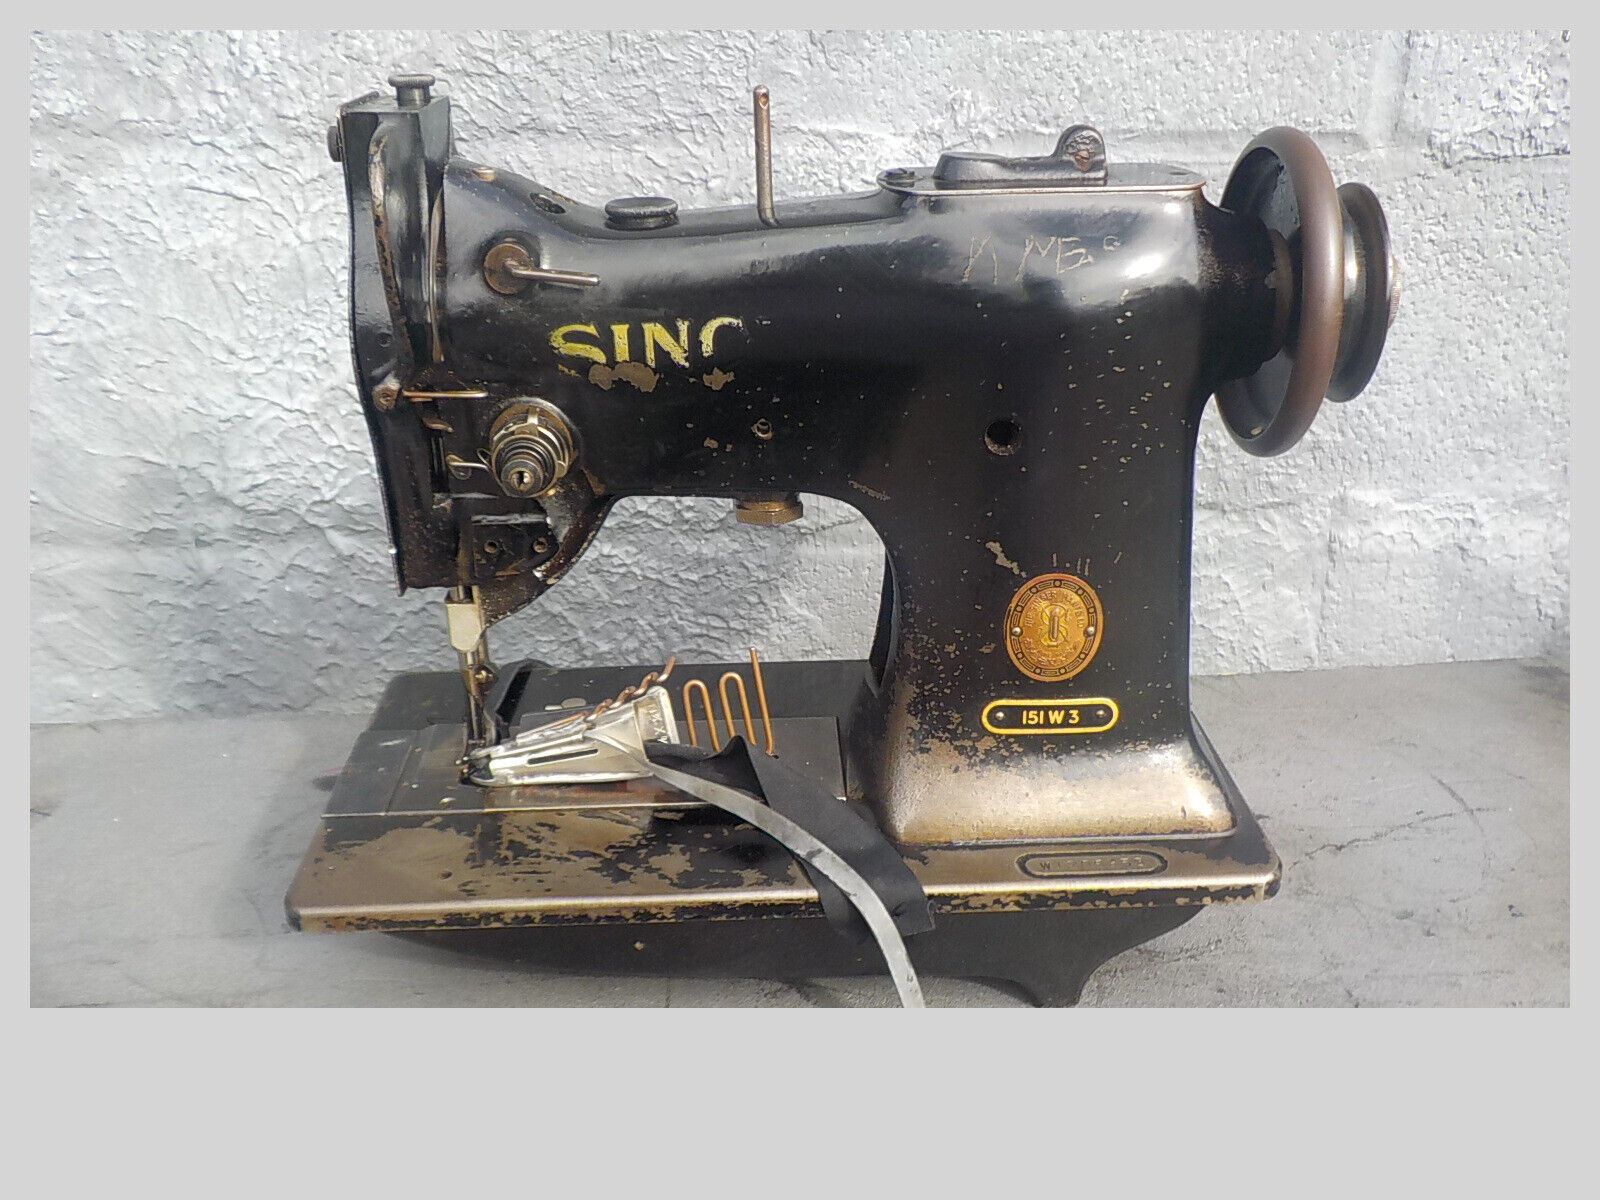 Vintage Industrial Sewing Machine Singer 151w3 ,one needle walking foot-Leather